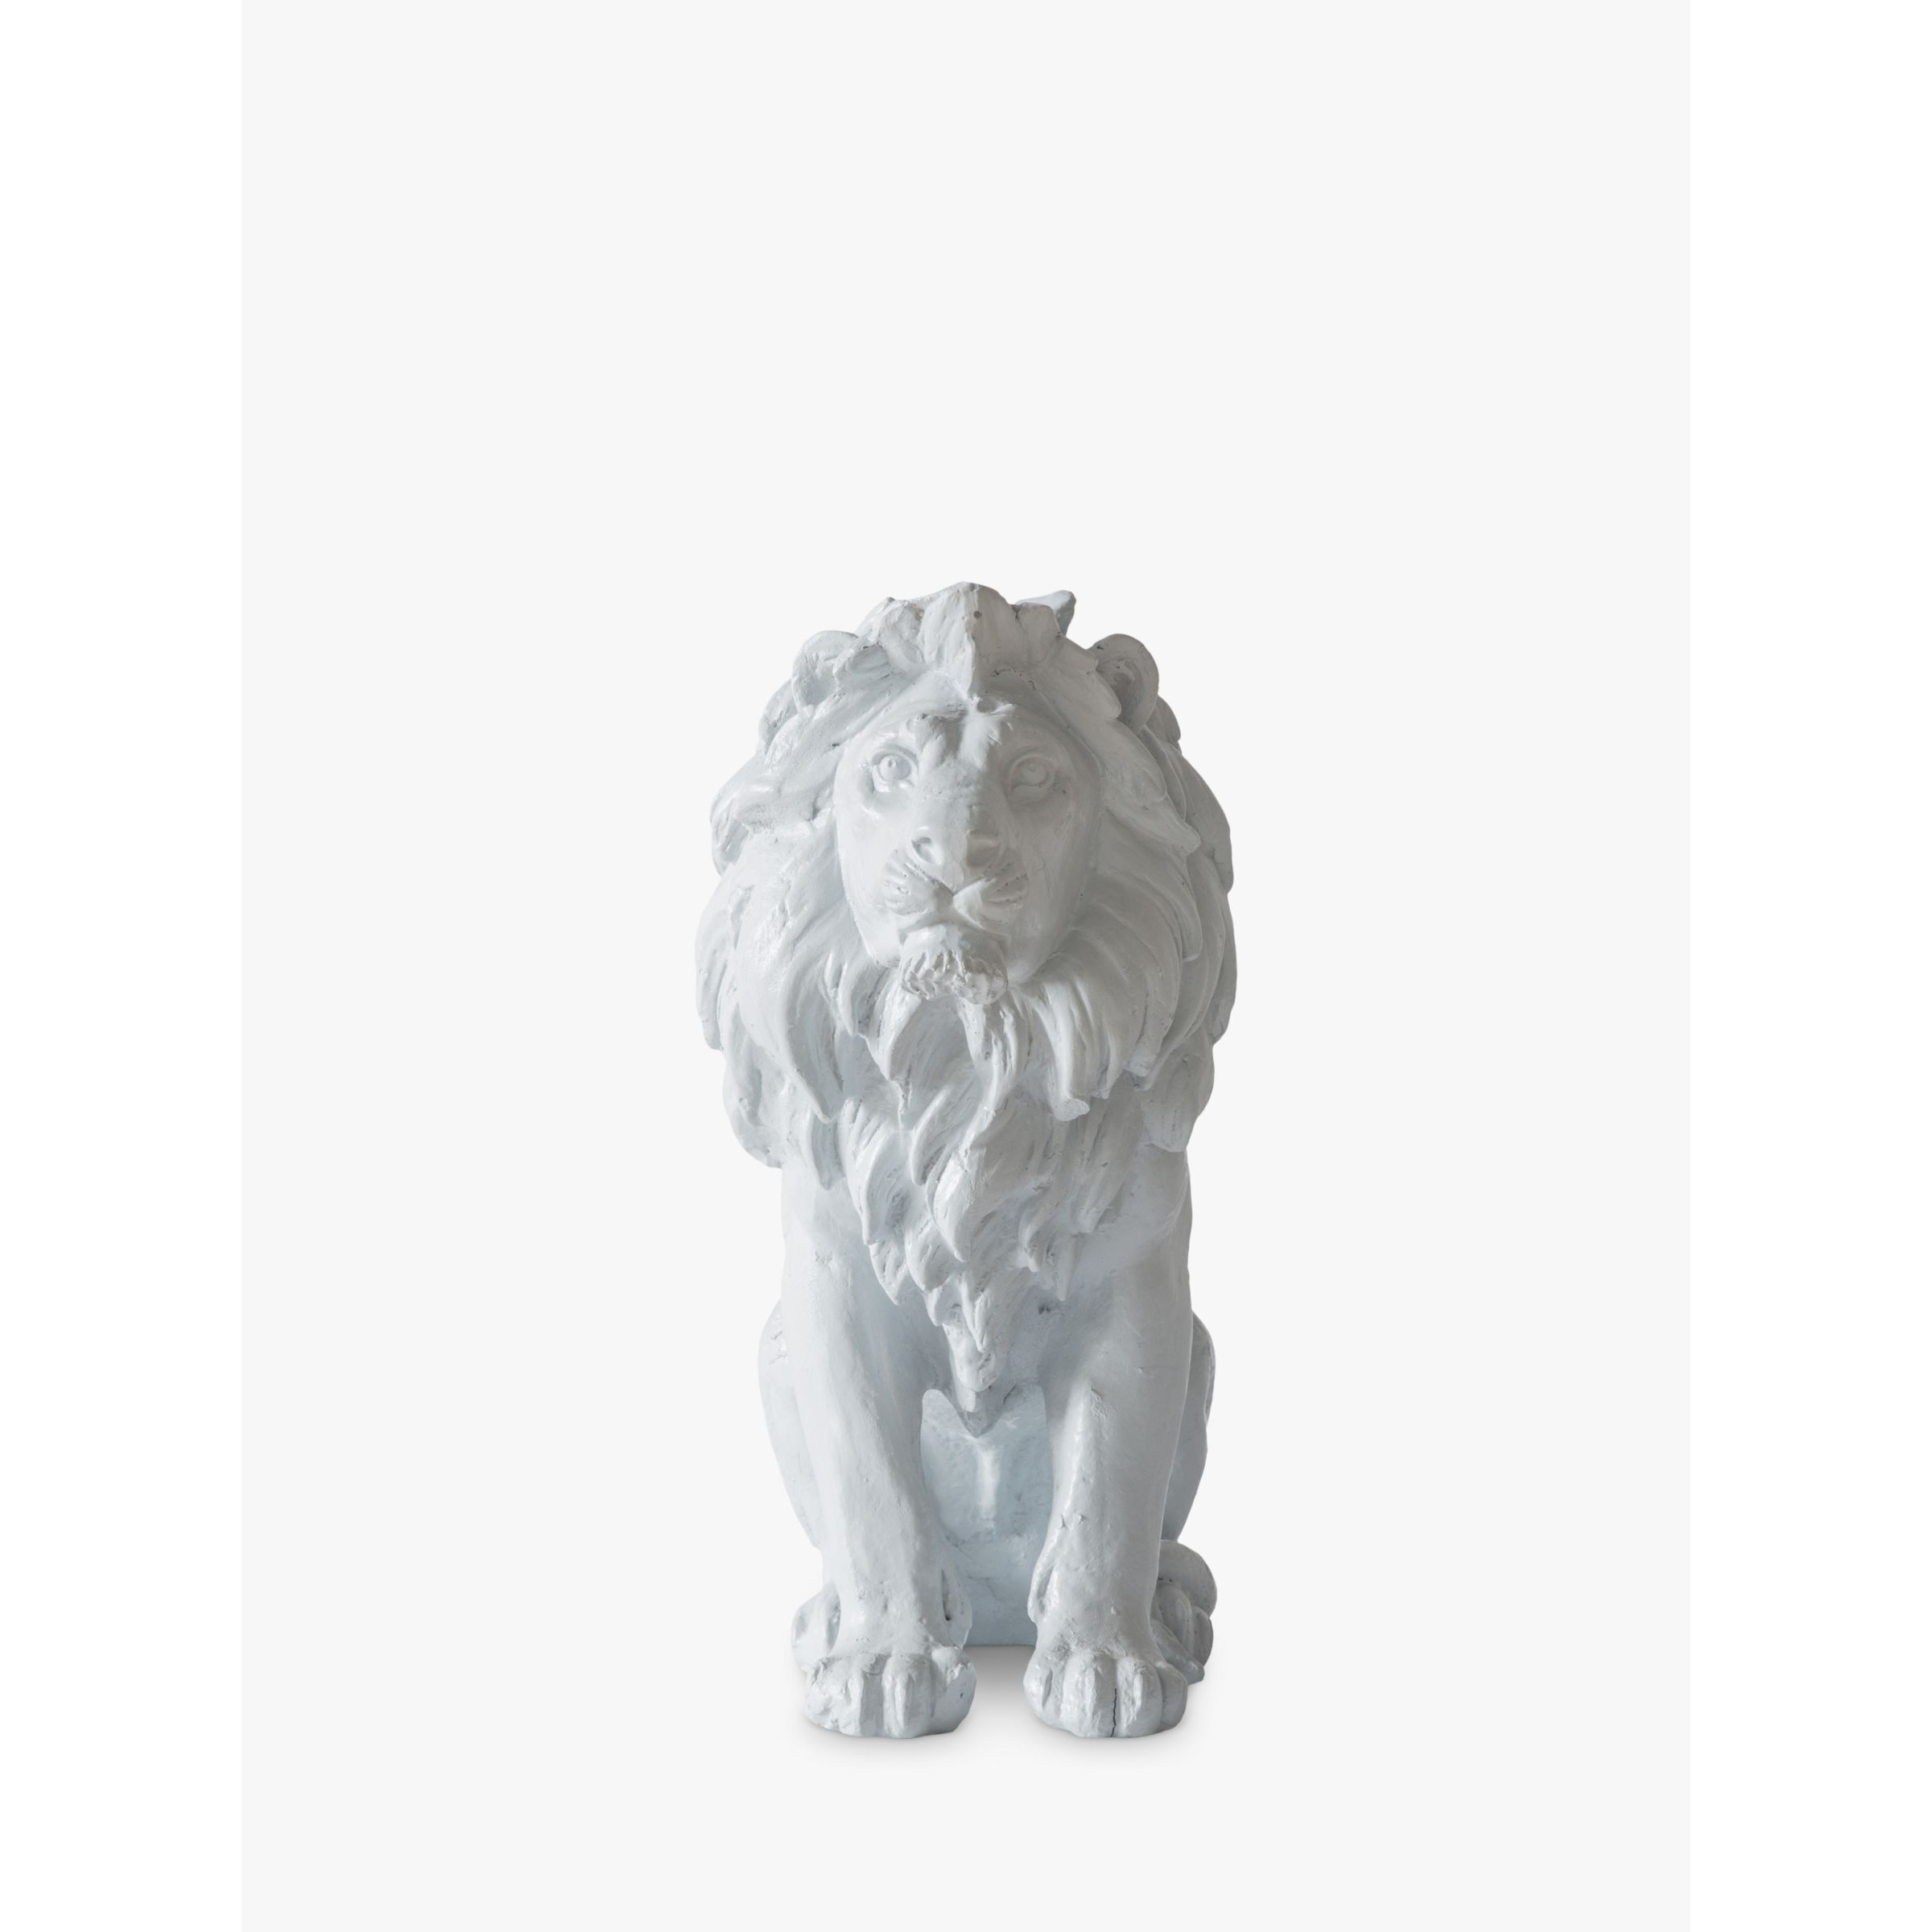 John Lewis Sitting Lion Garden Sculpture, H24cm, White - image 1